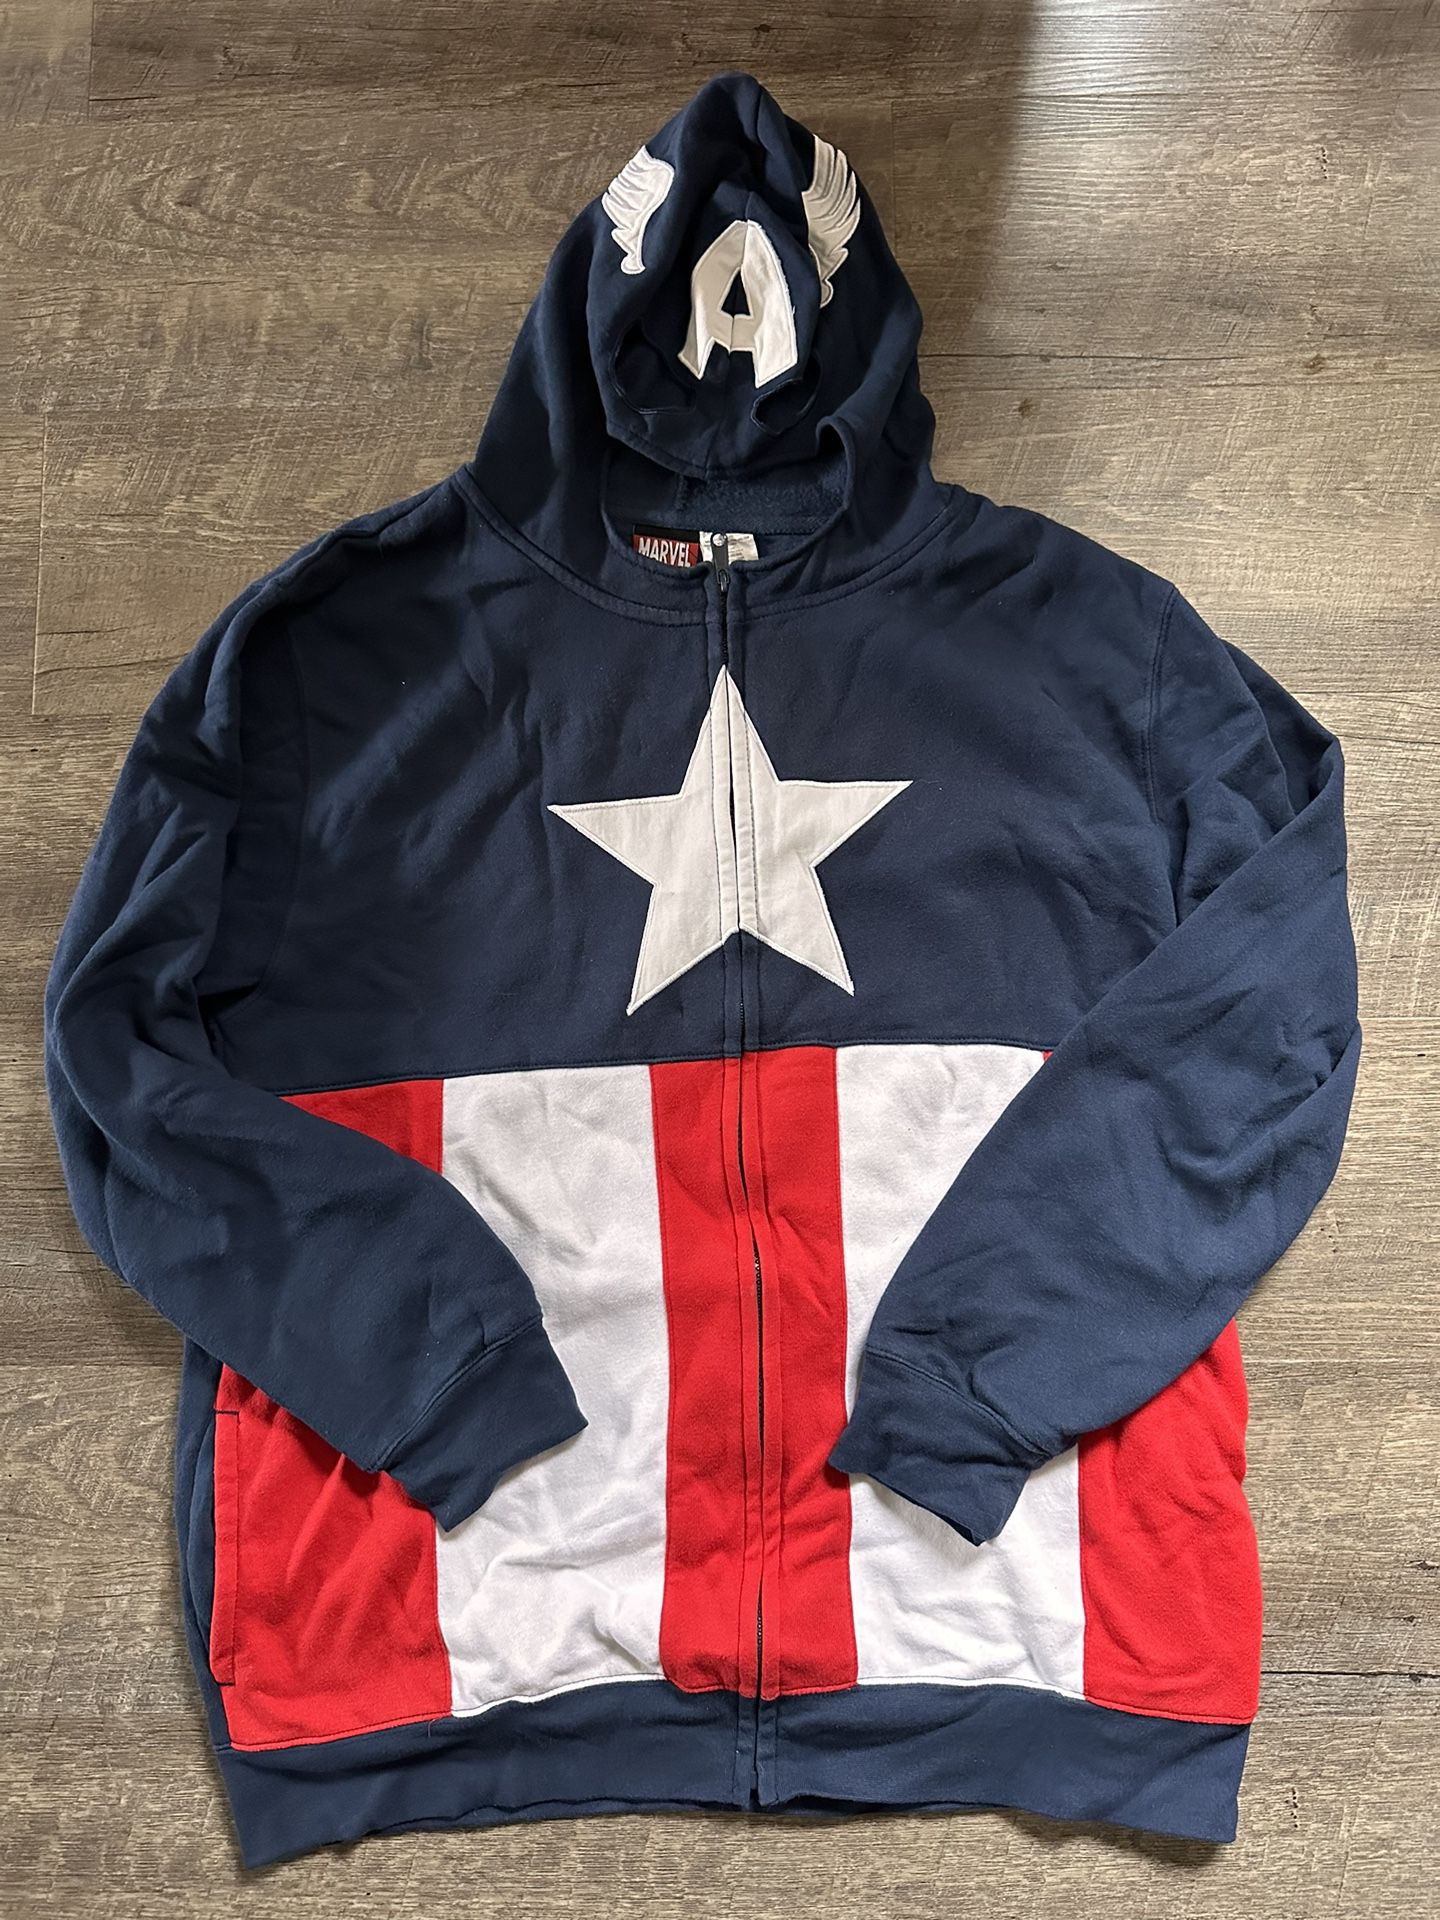 Captain America XL Sweater - Adult Costume